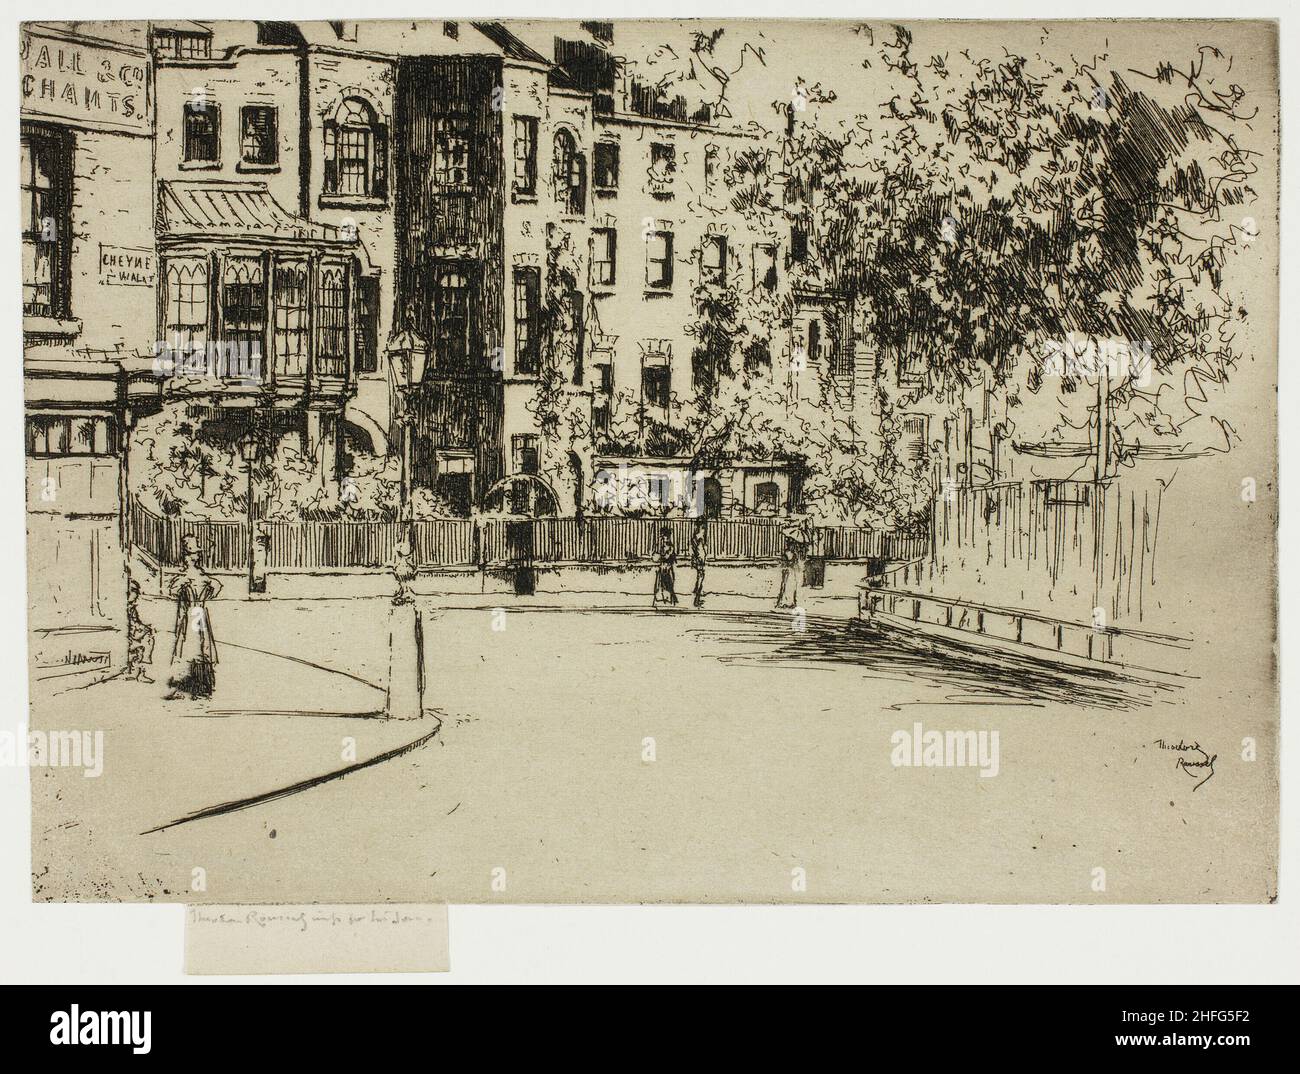 The Corner of Cheyne Walk, Chelsea, 1888-89. Stock Photo